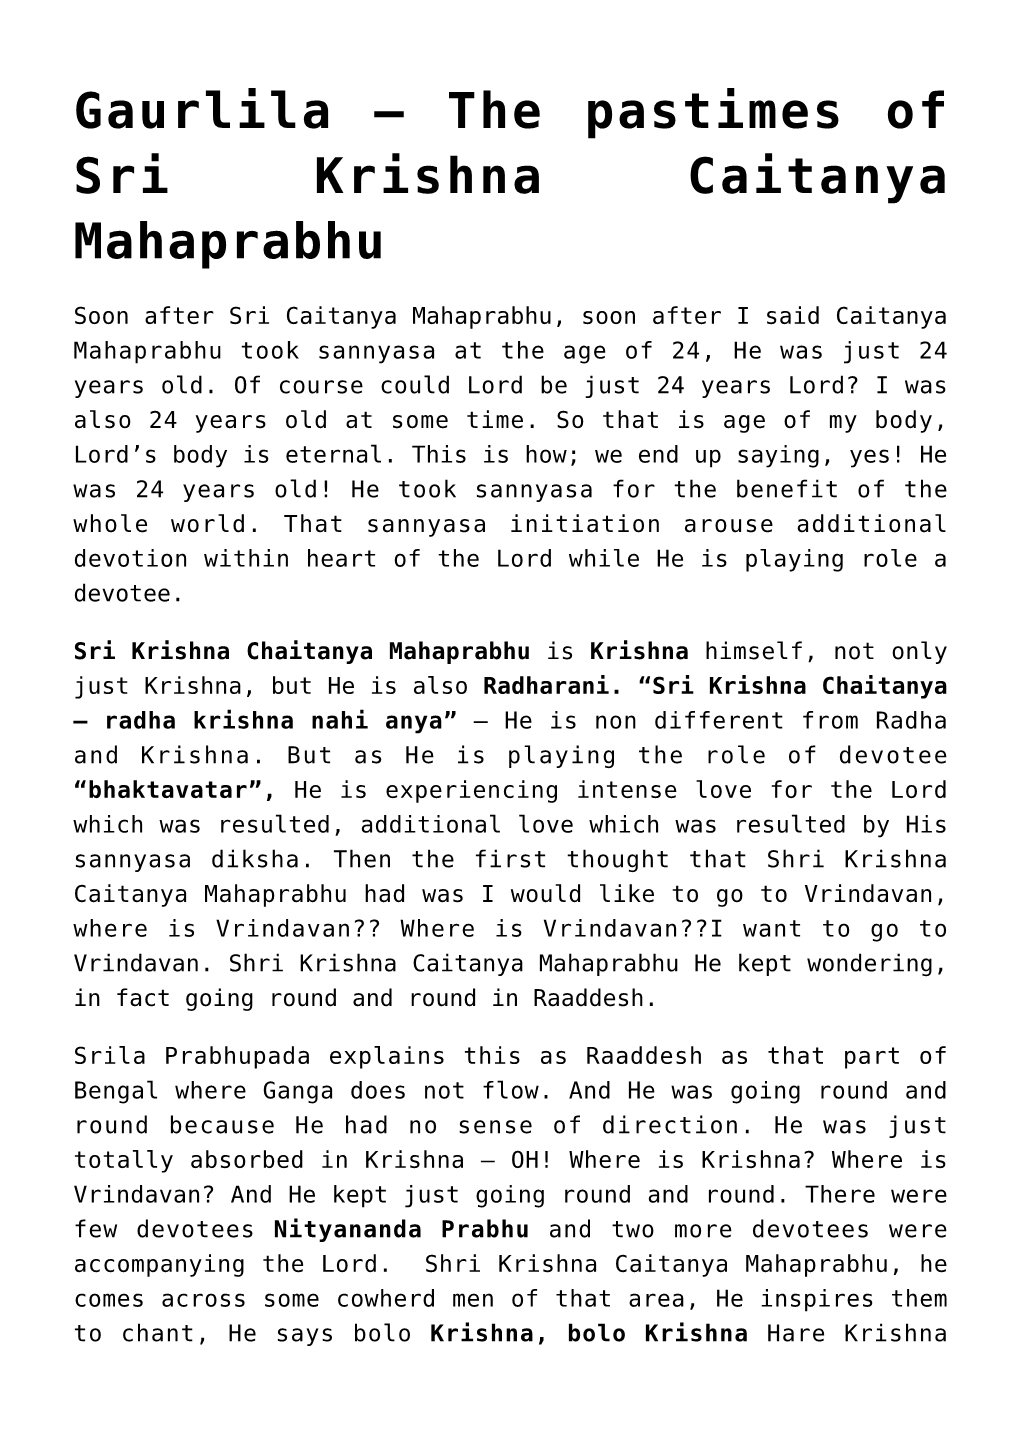 The Pastimes of Sri Krishna Caitanya Mahaprabhu